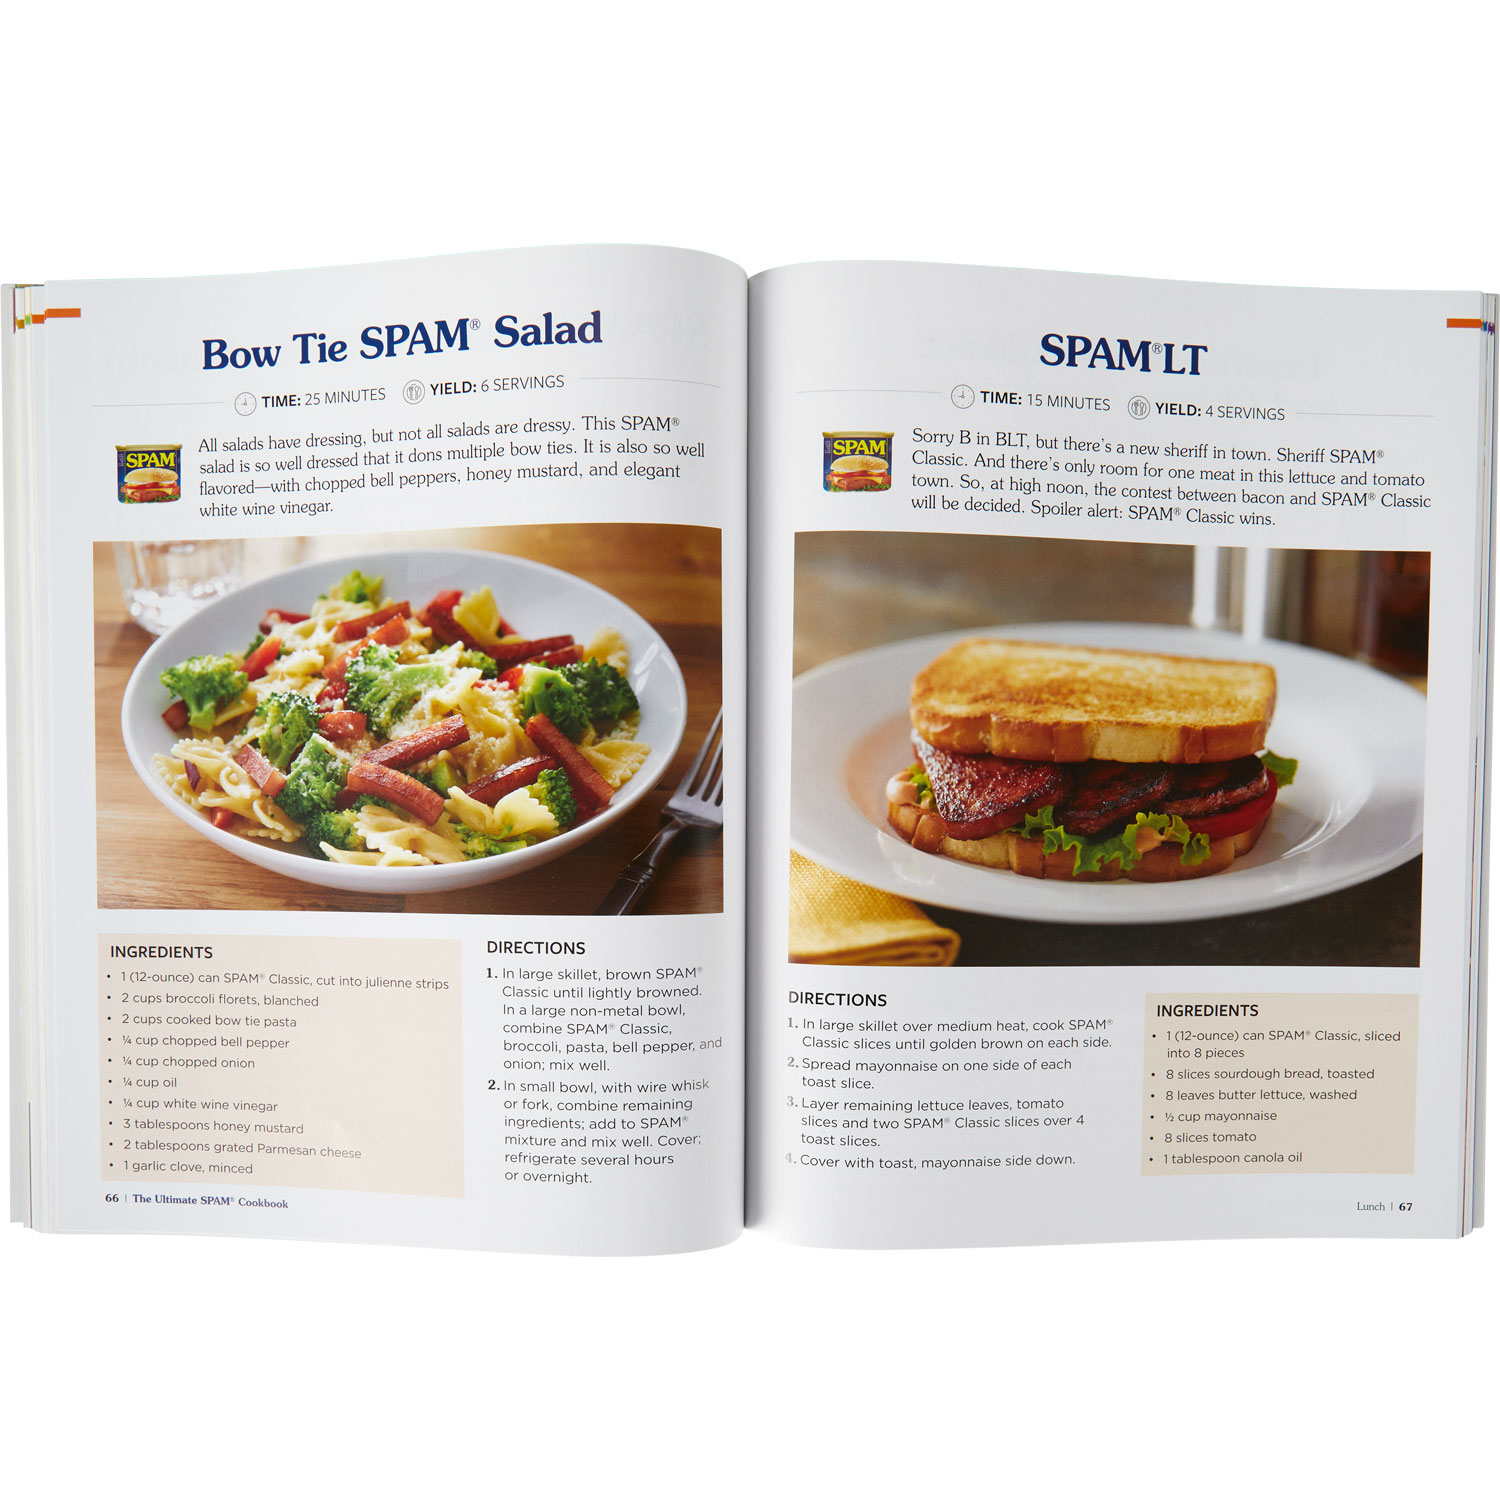 The Ultimate SPAM Cookbook